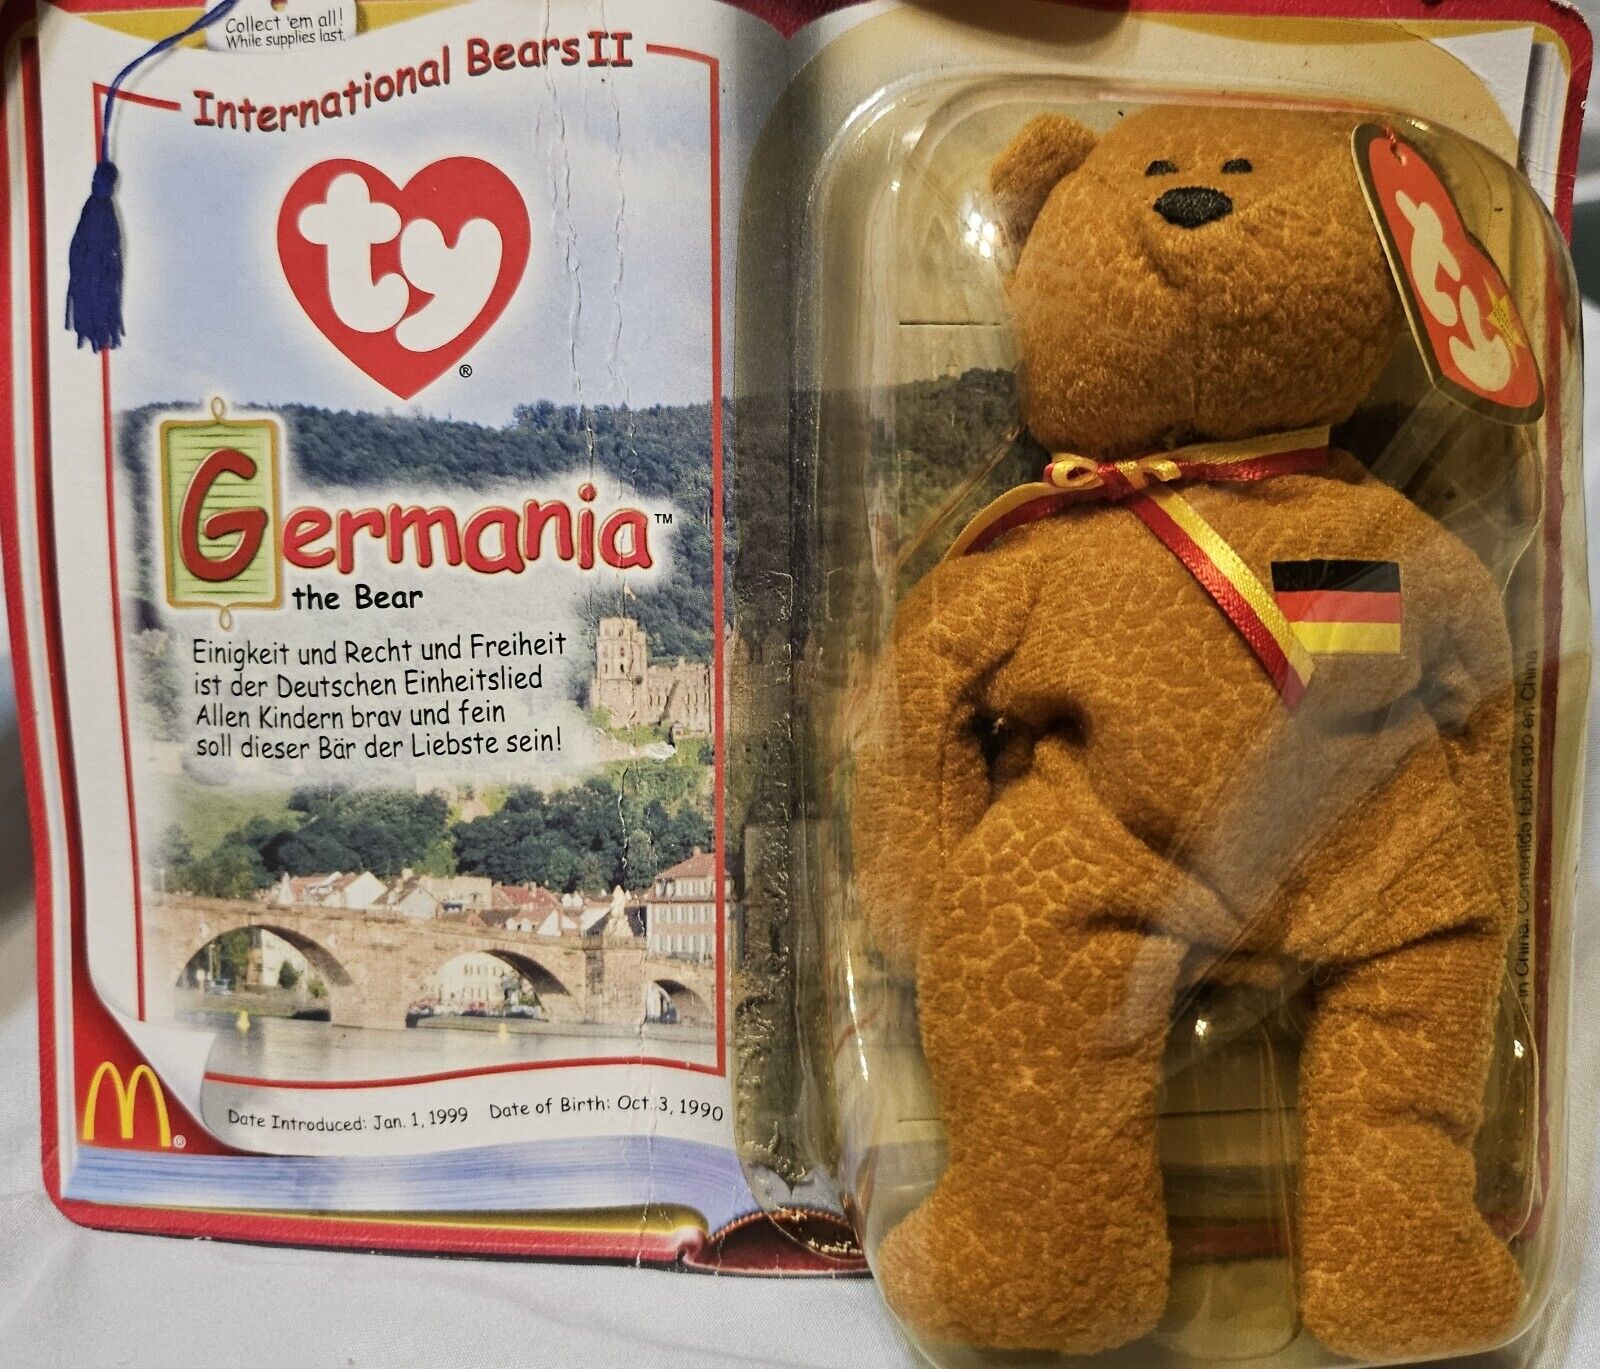 TY Teenie Beanie Babies Germania The Bear 1999 McDonald’s Imternational Bears II